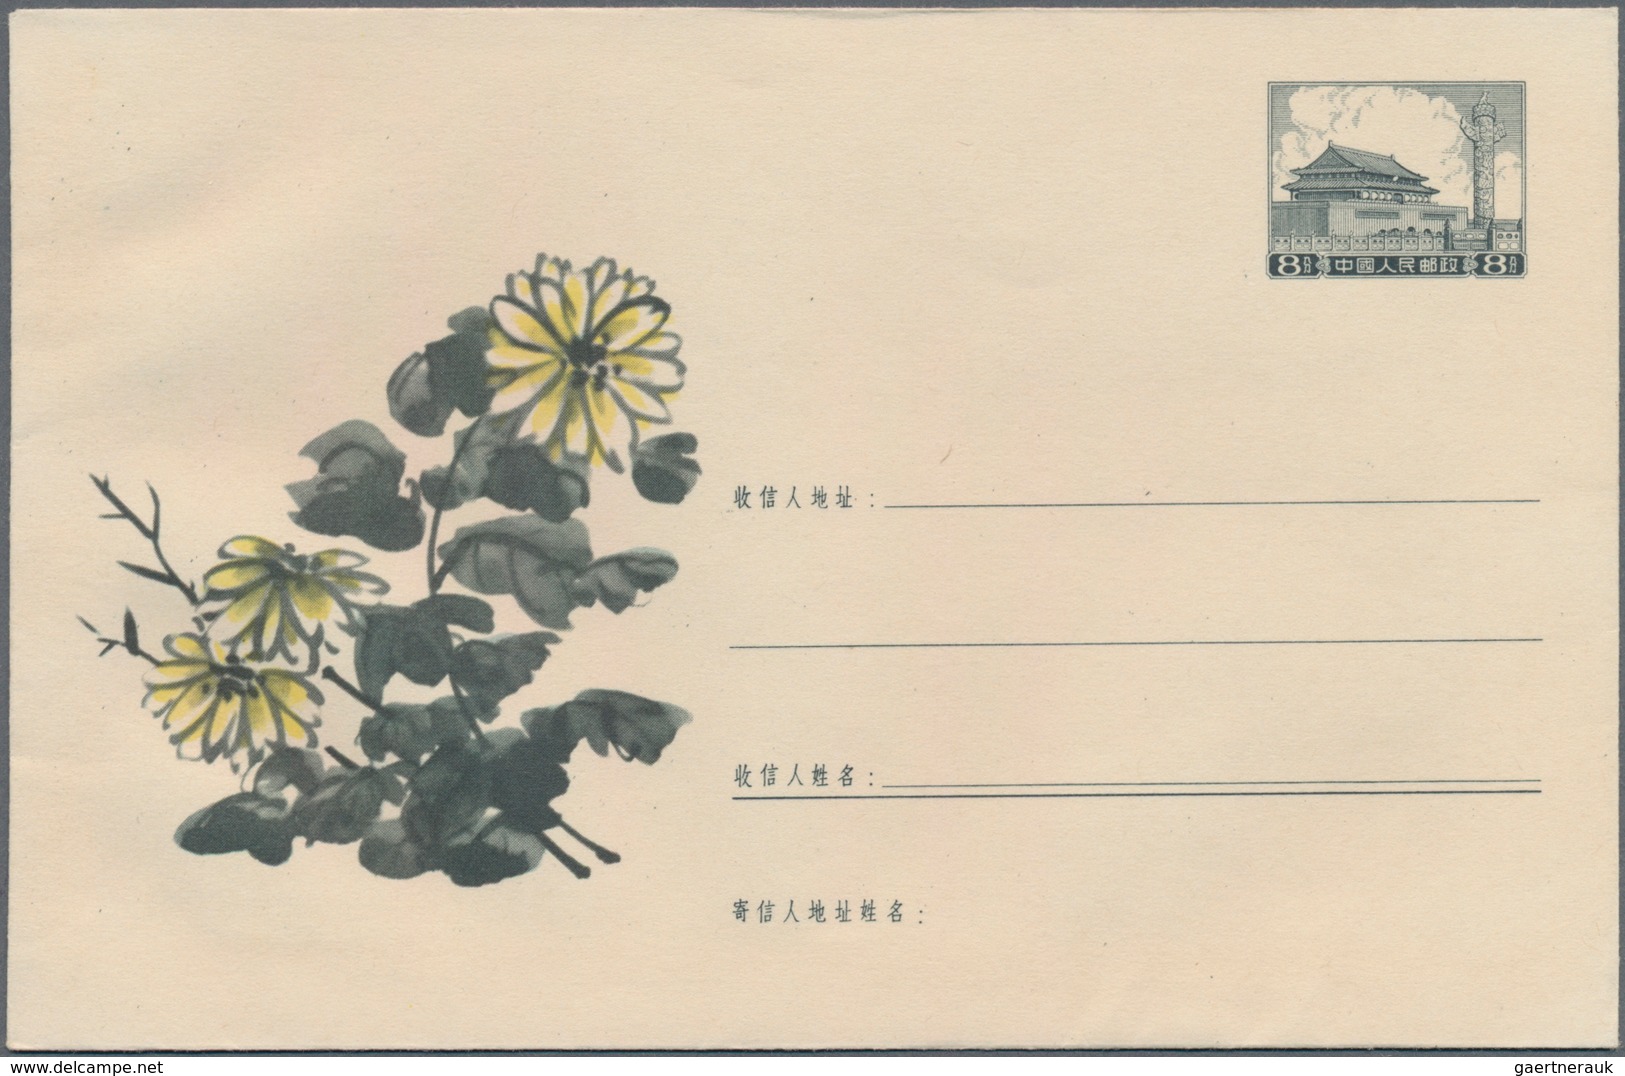 China - Volksrepublik - Ganzsachen: 1959, "arts envelopes" pictorial envelopes 8 F. grey (9) with im